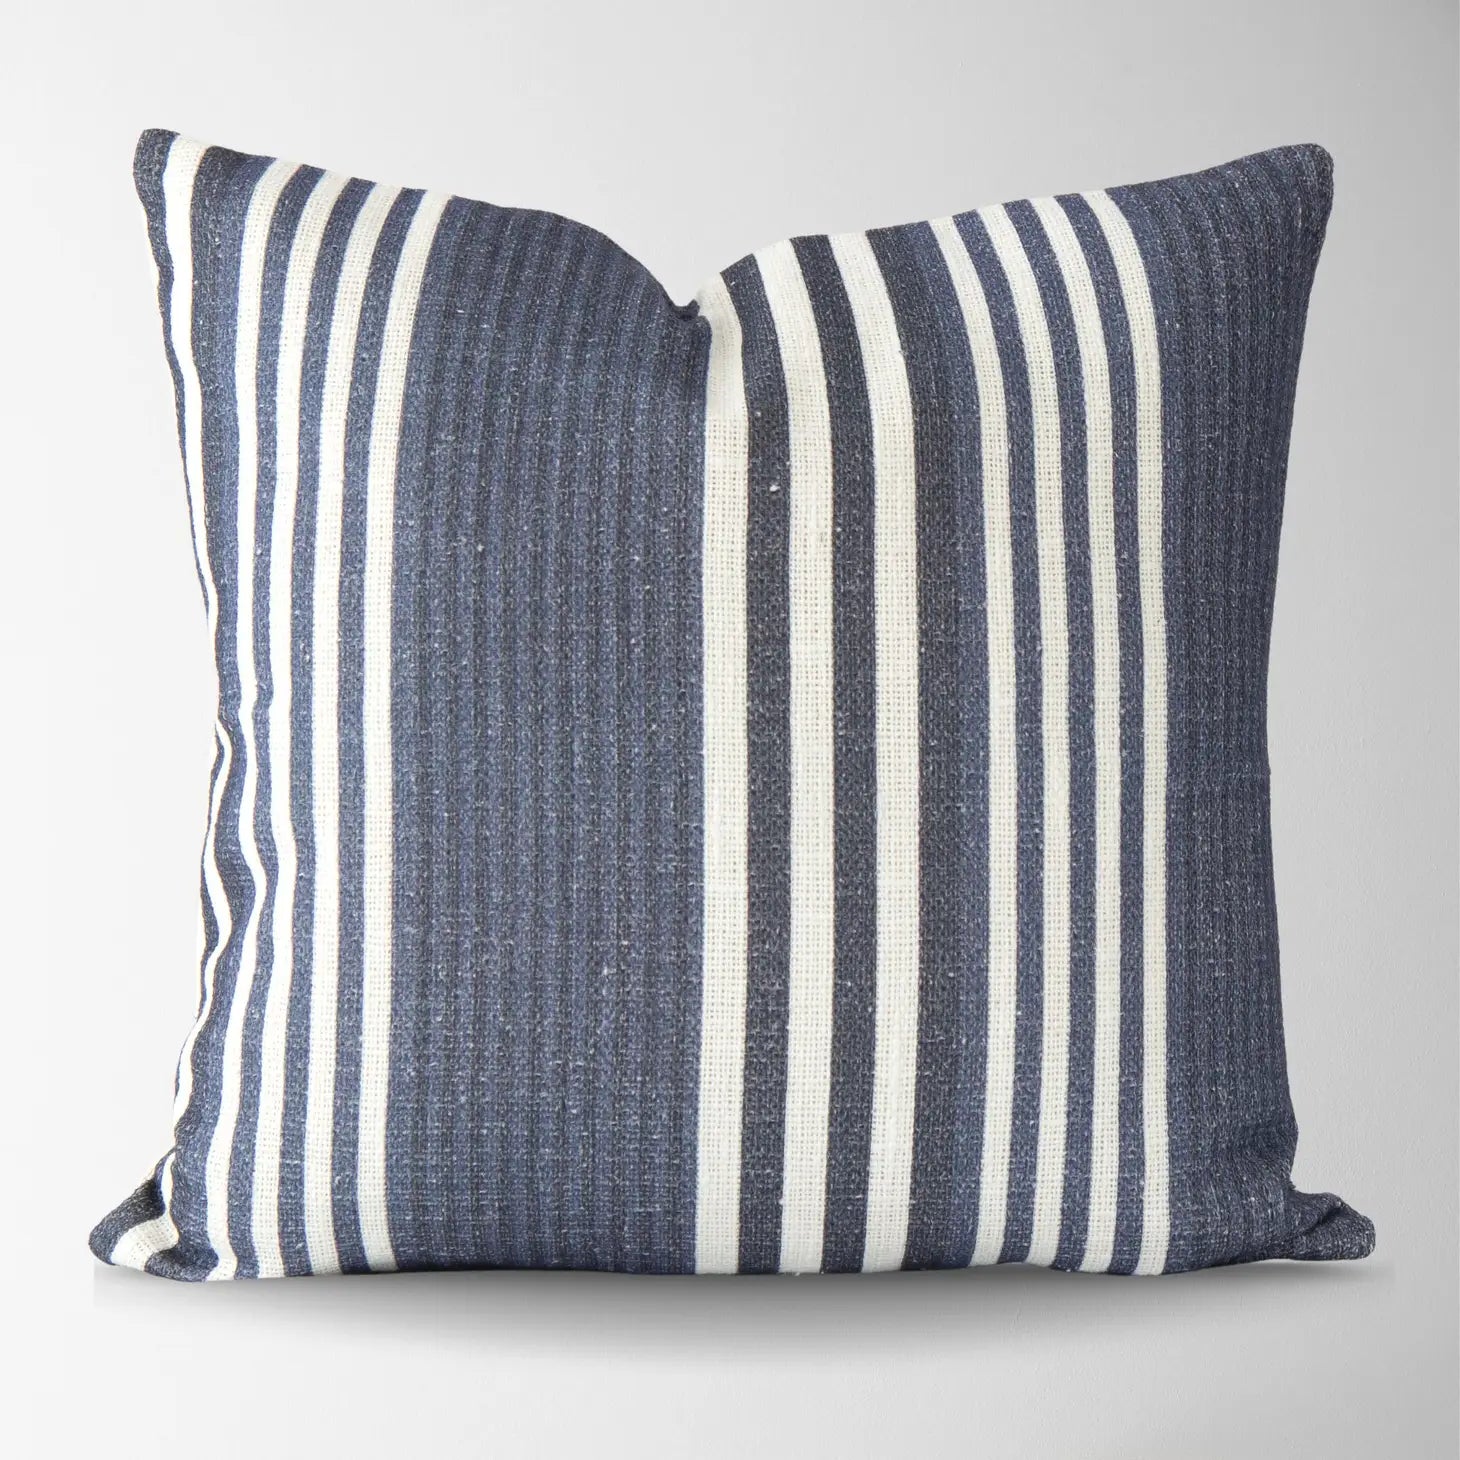 Rylee Vintage Stripe Pillow - Navy